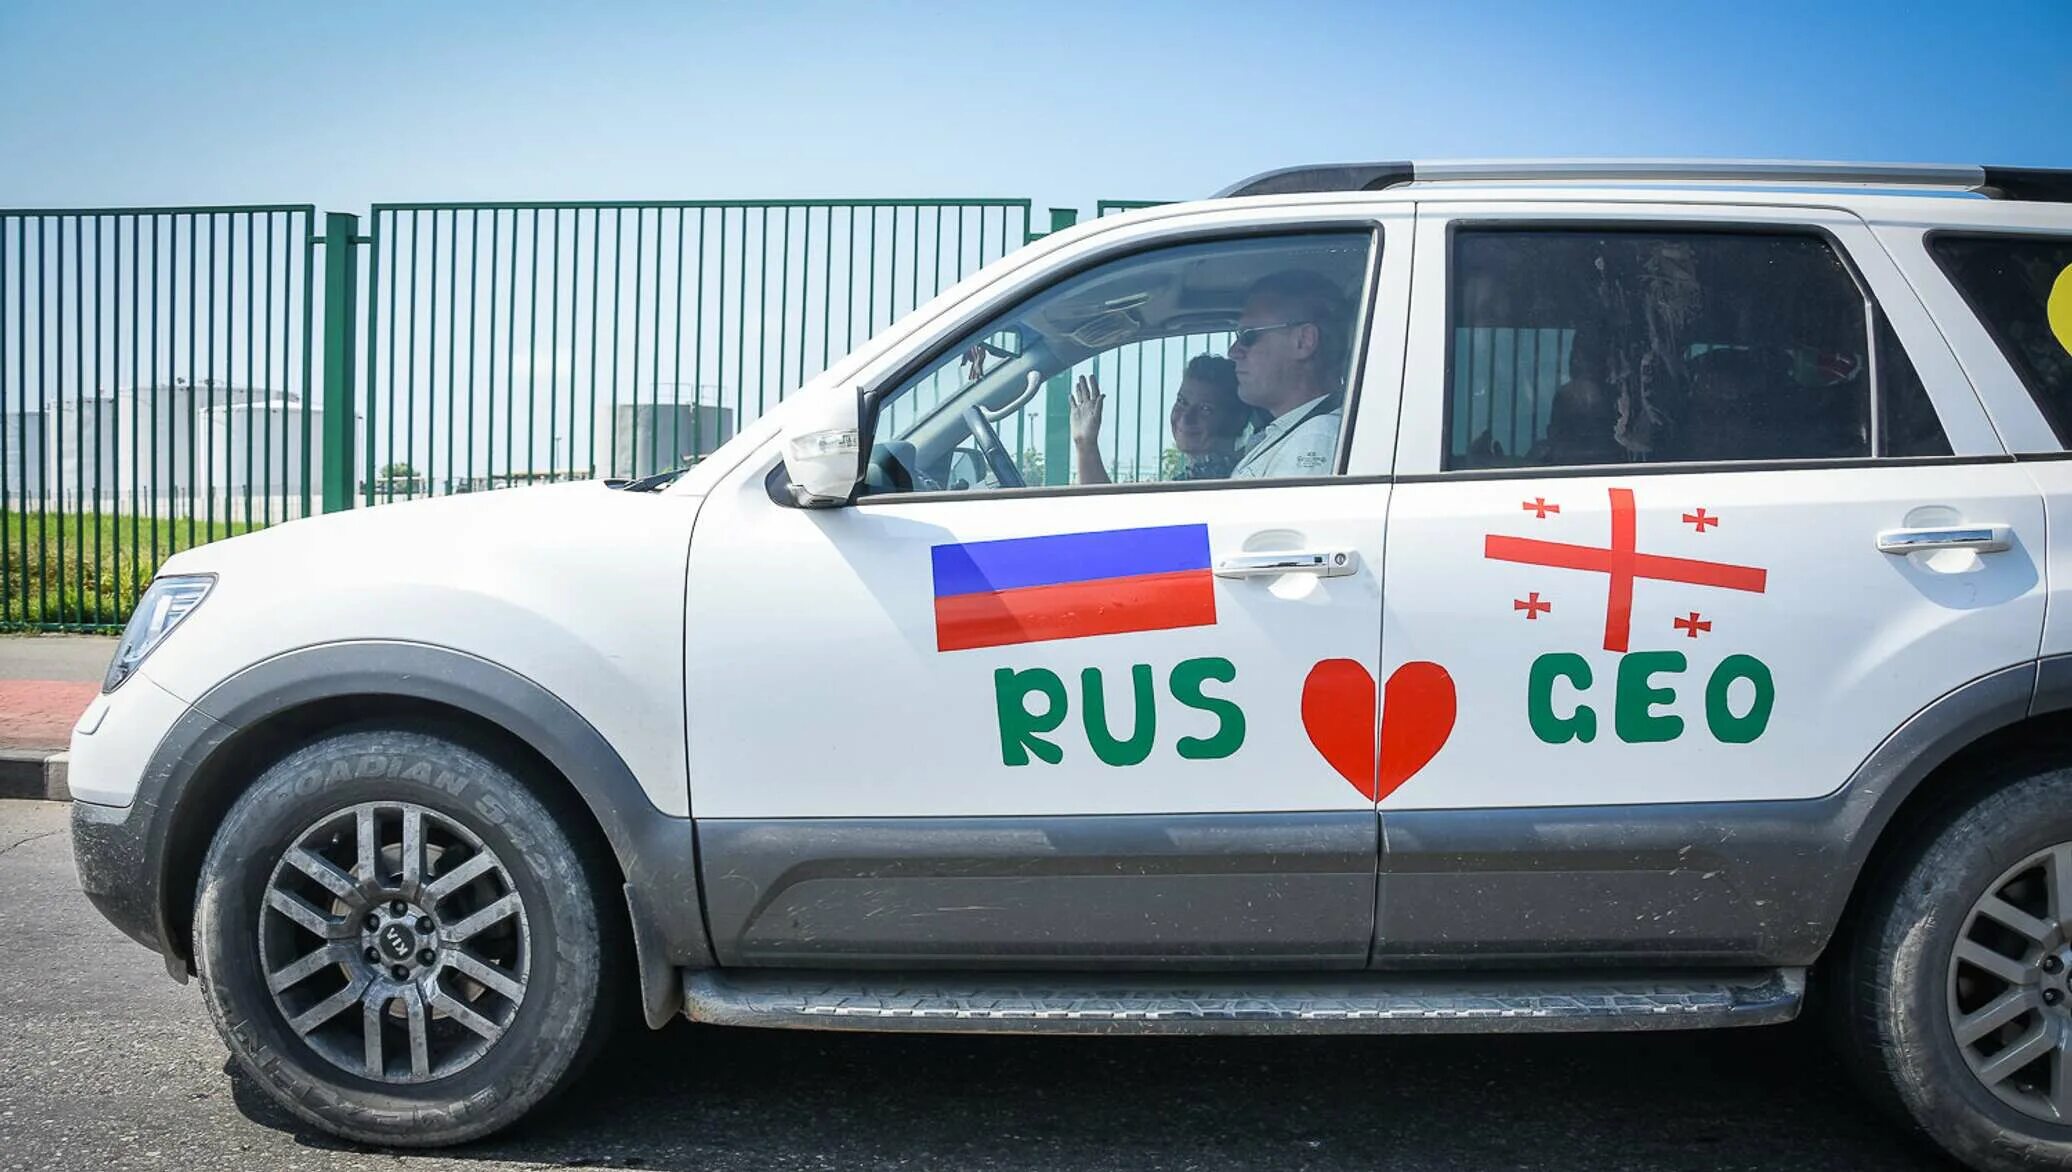 Грузия это россия. Автомобиль с флагом Грузии. Россия Грузия Дружба. Флаг Грузии и России. Флаг Грузии на машине.